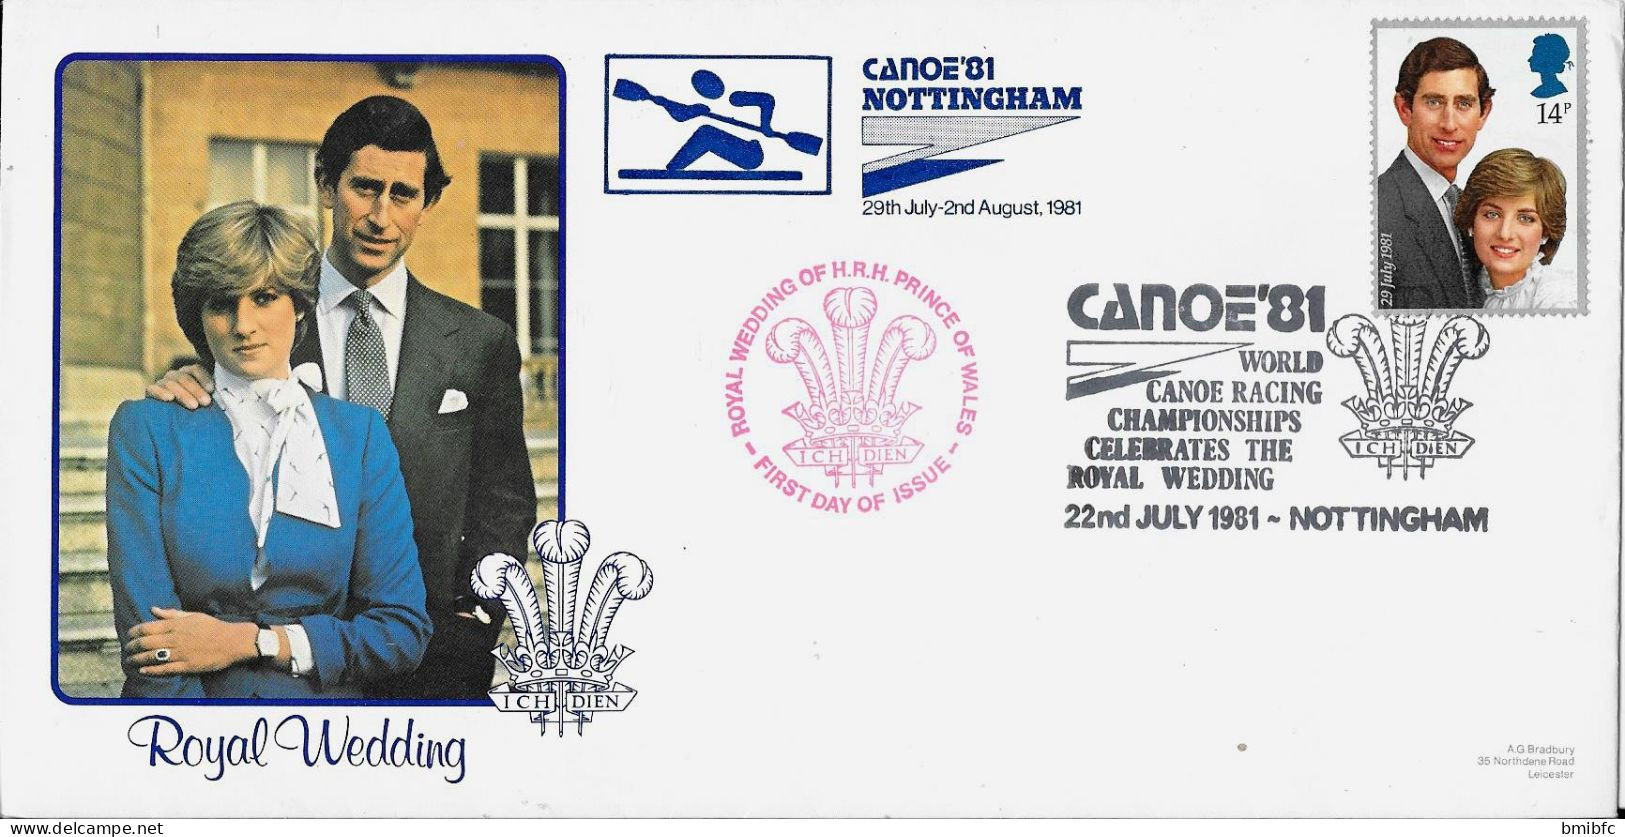 CANOE'81 NOTTINGHAM 22nd JULY 1981 - Canoa